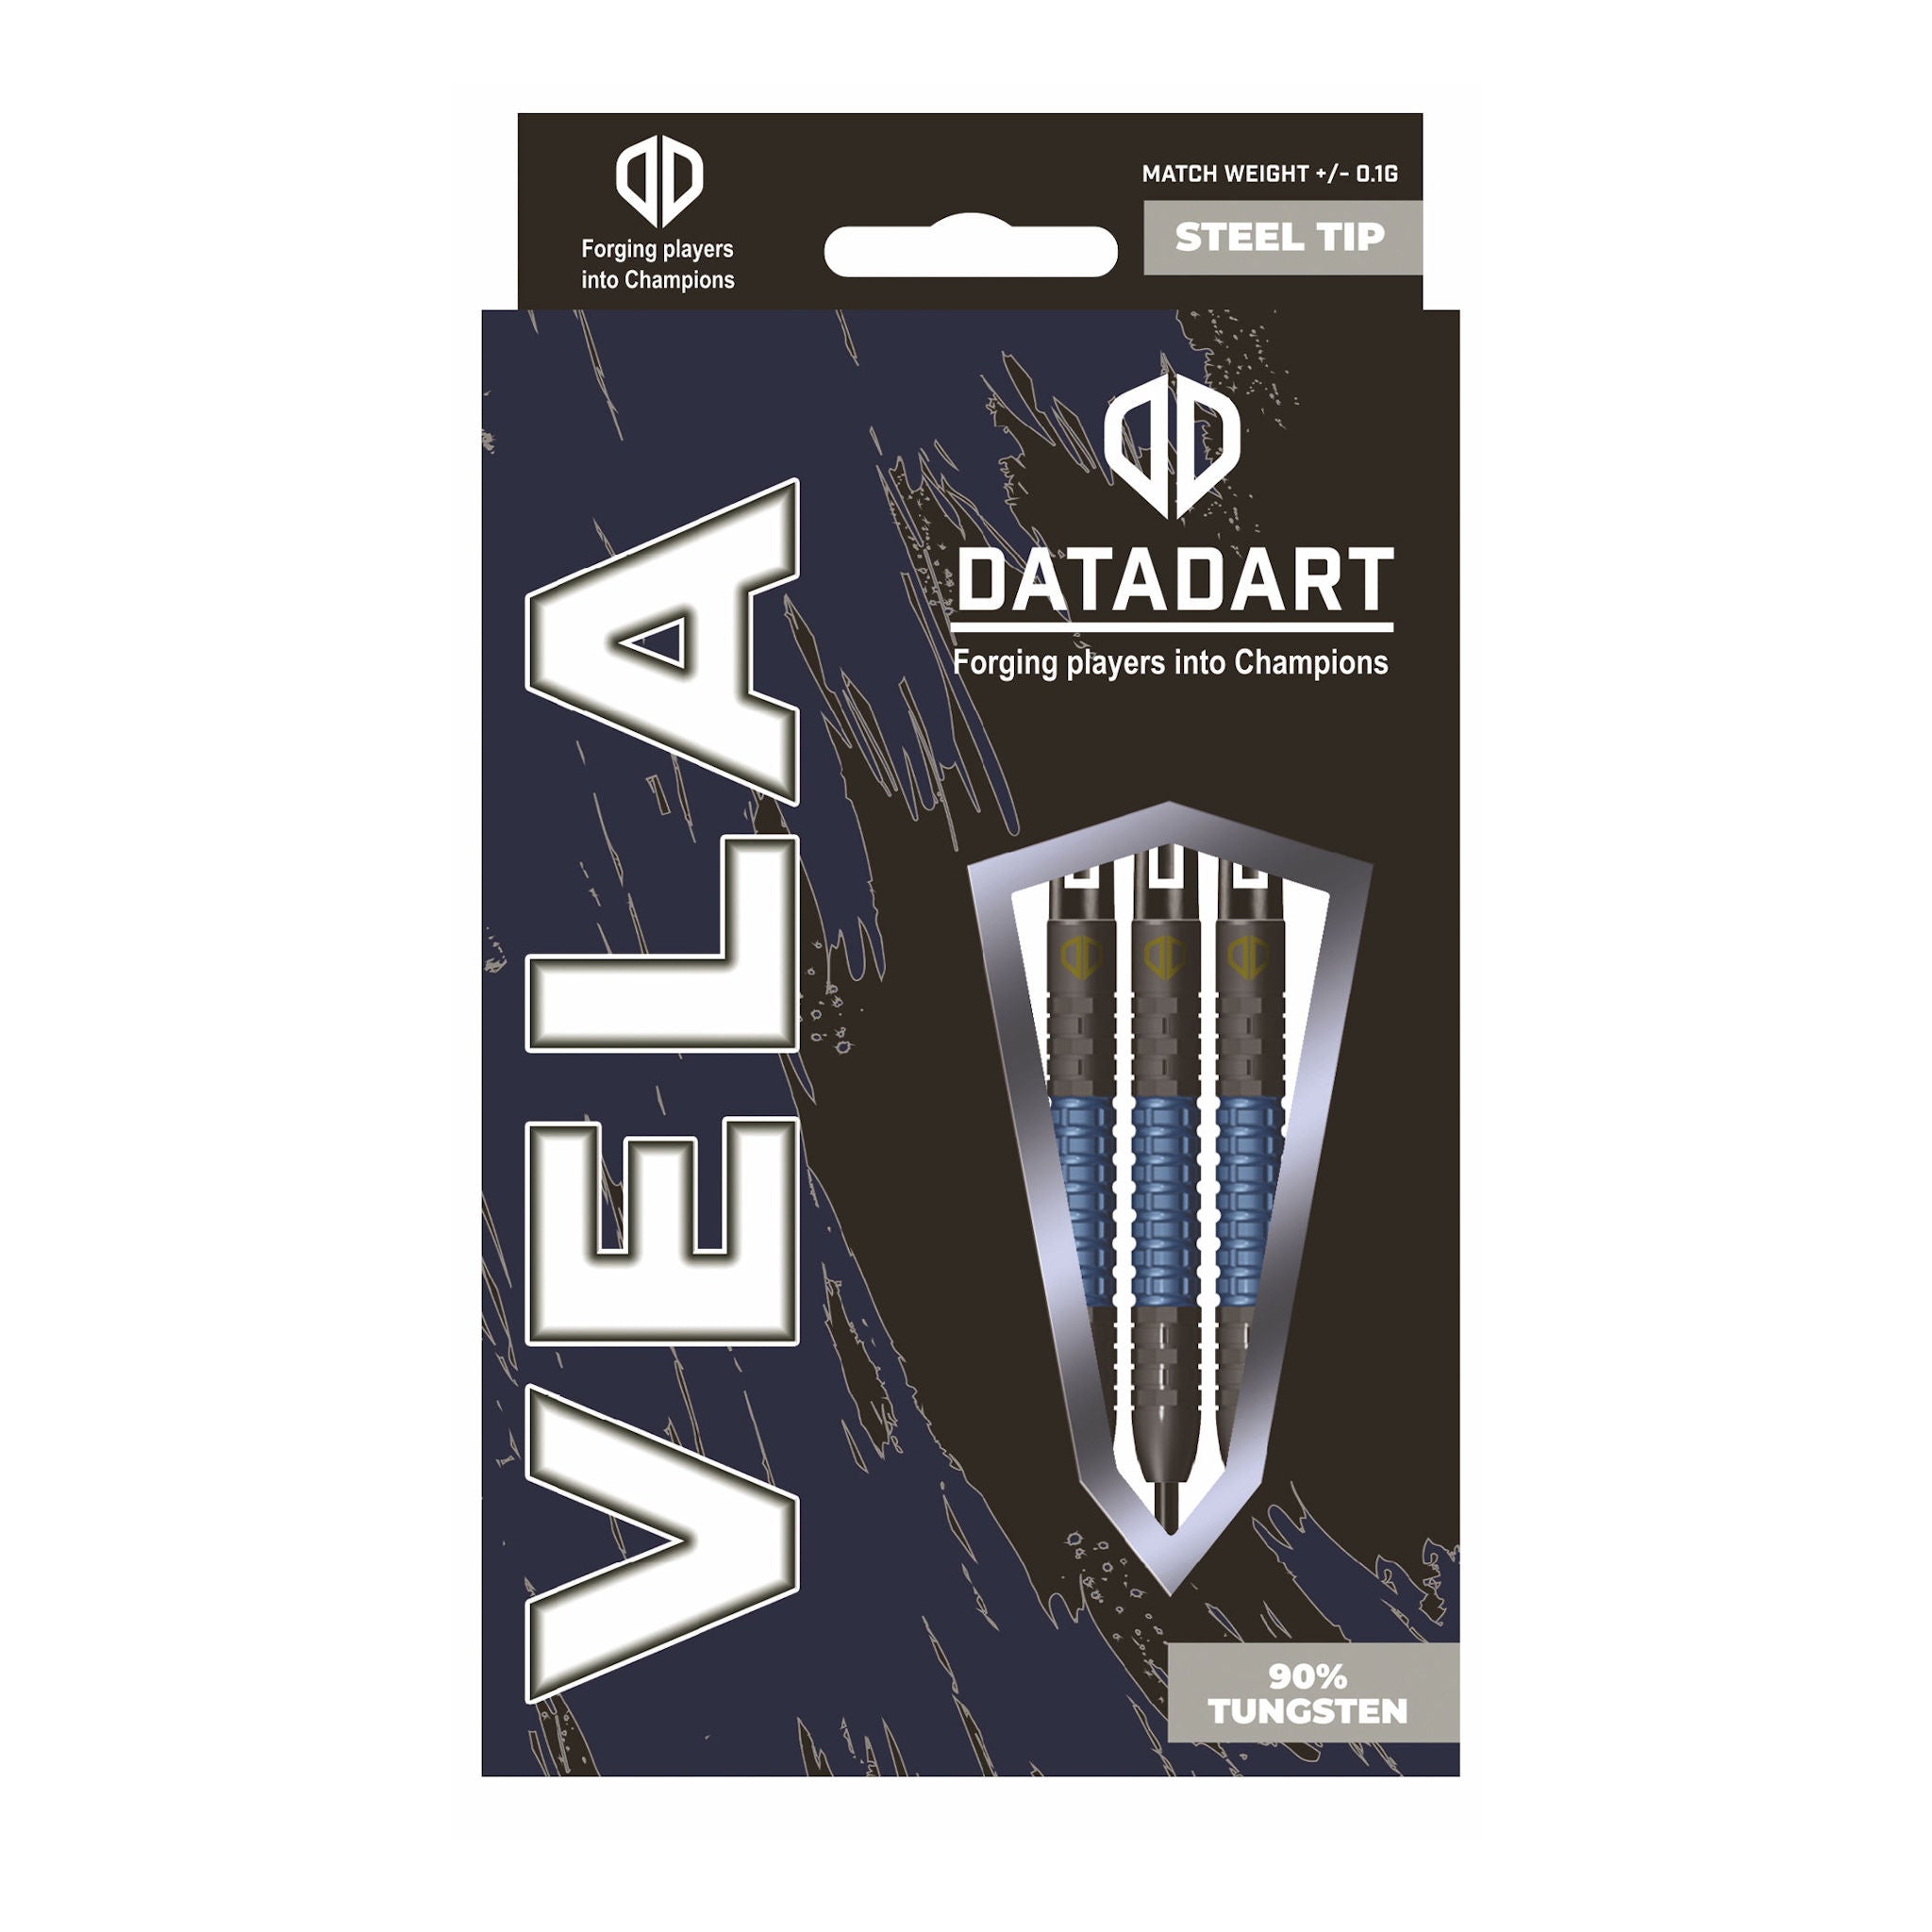 Datadart Vela 90% Tungsten packaging